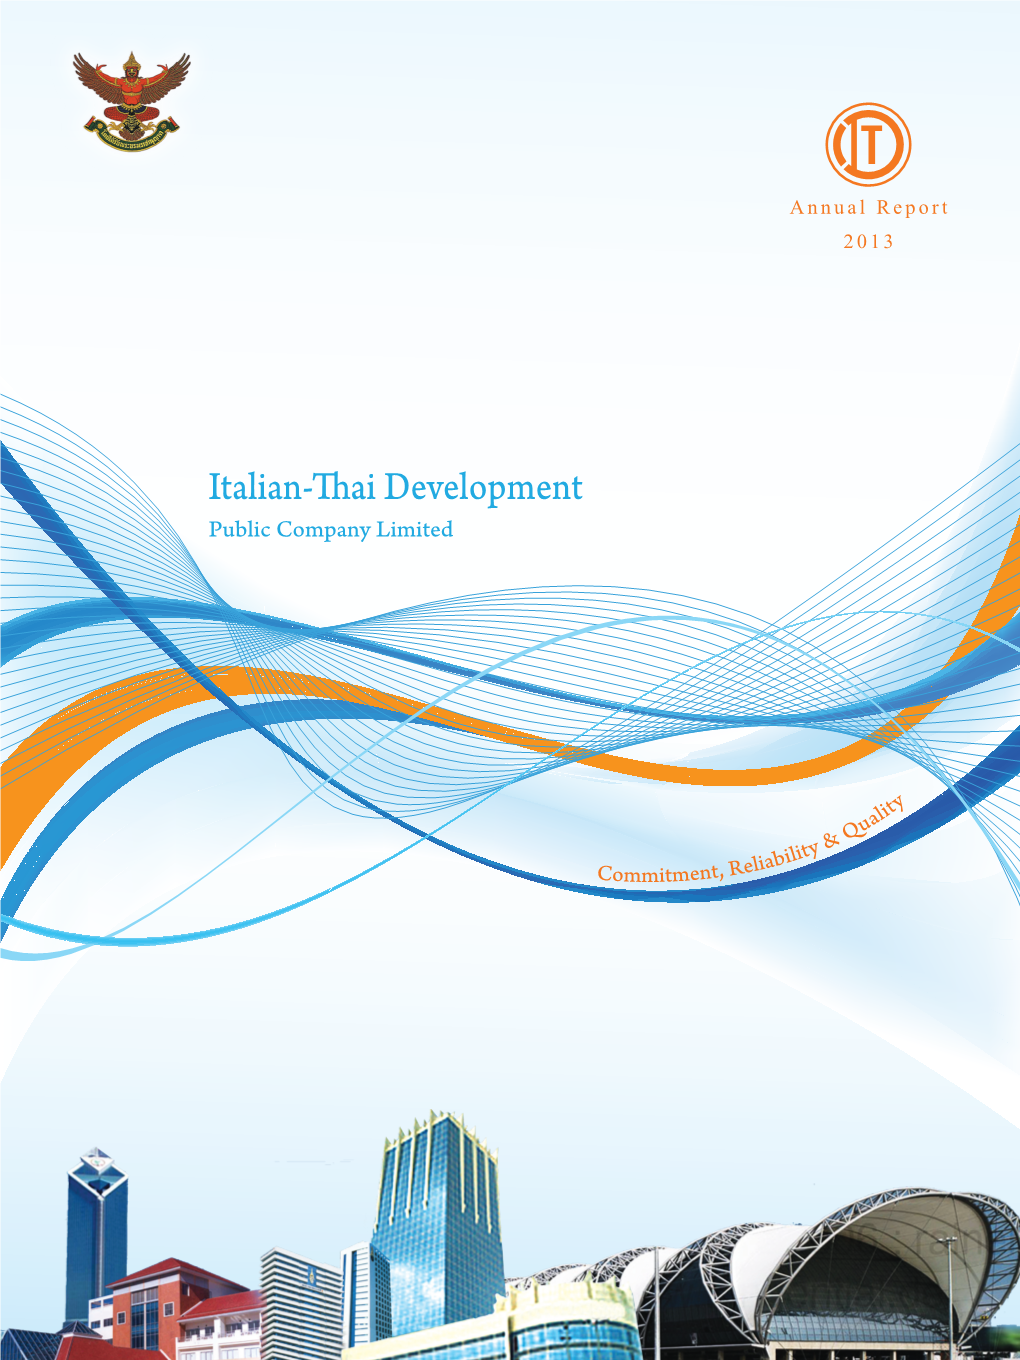 ITD: Italian-Thai Development Public Company Limited | Annual Report 2013